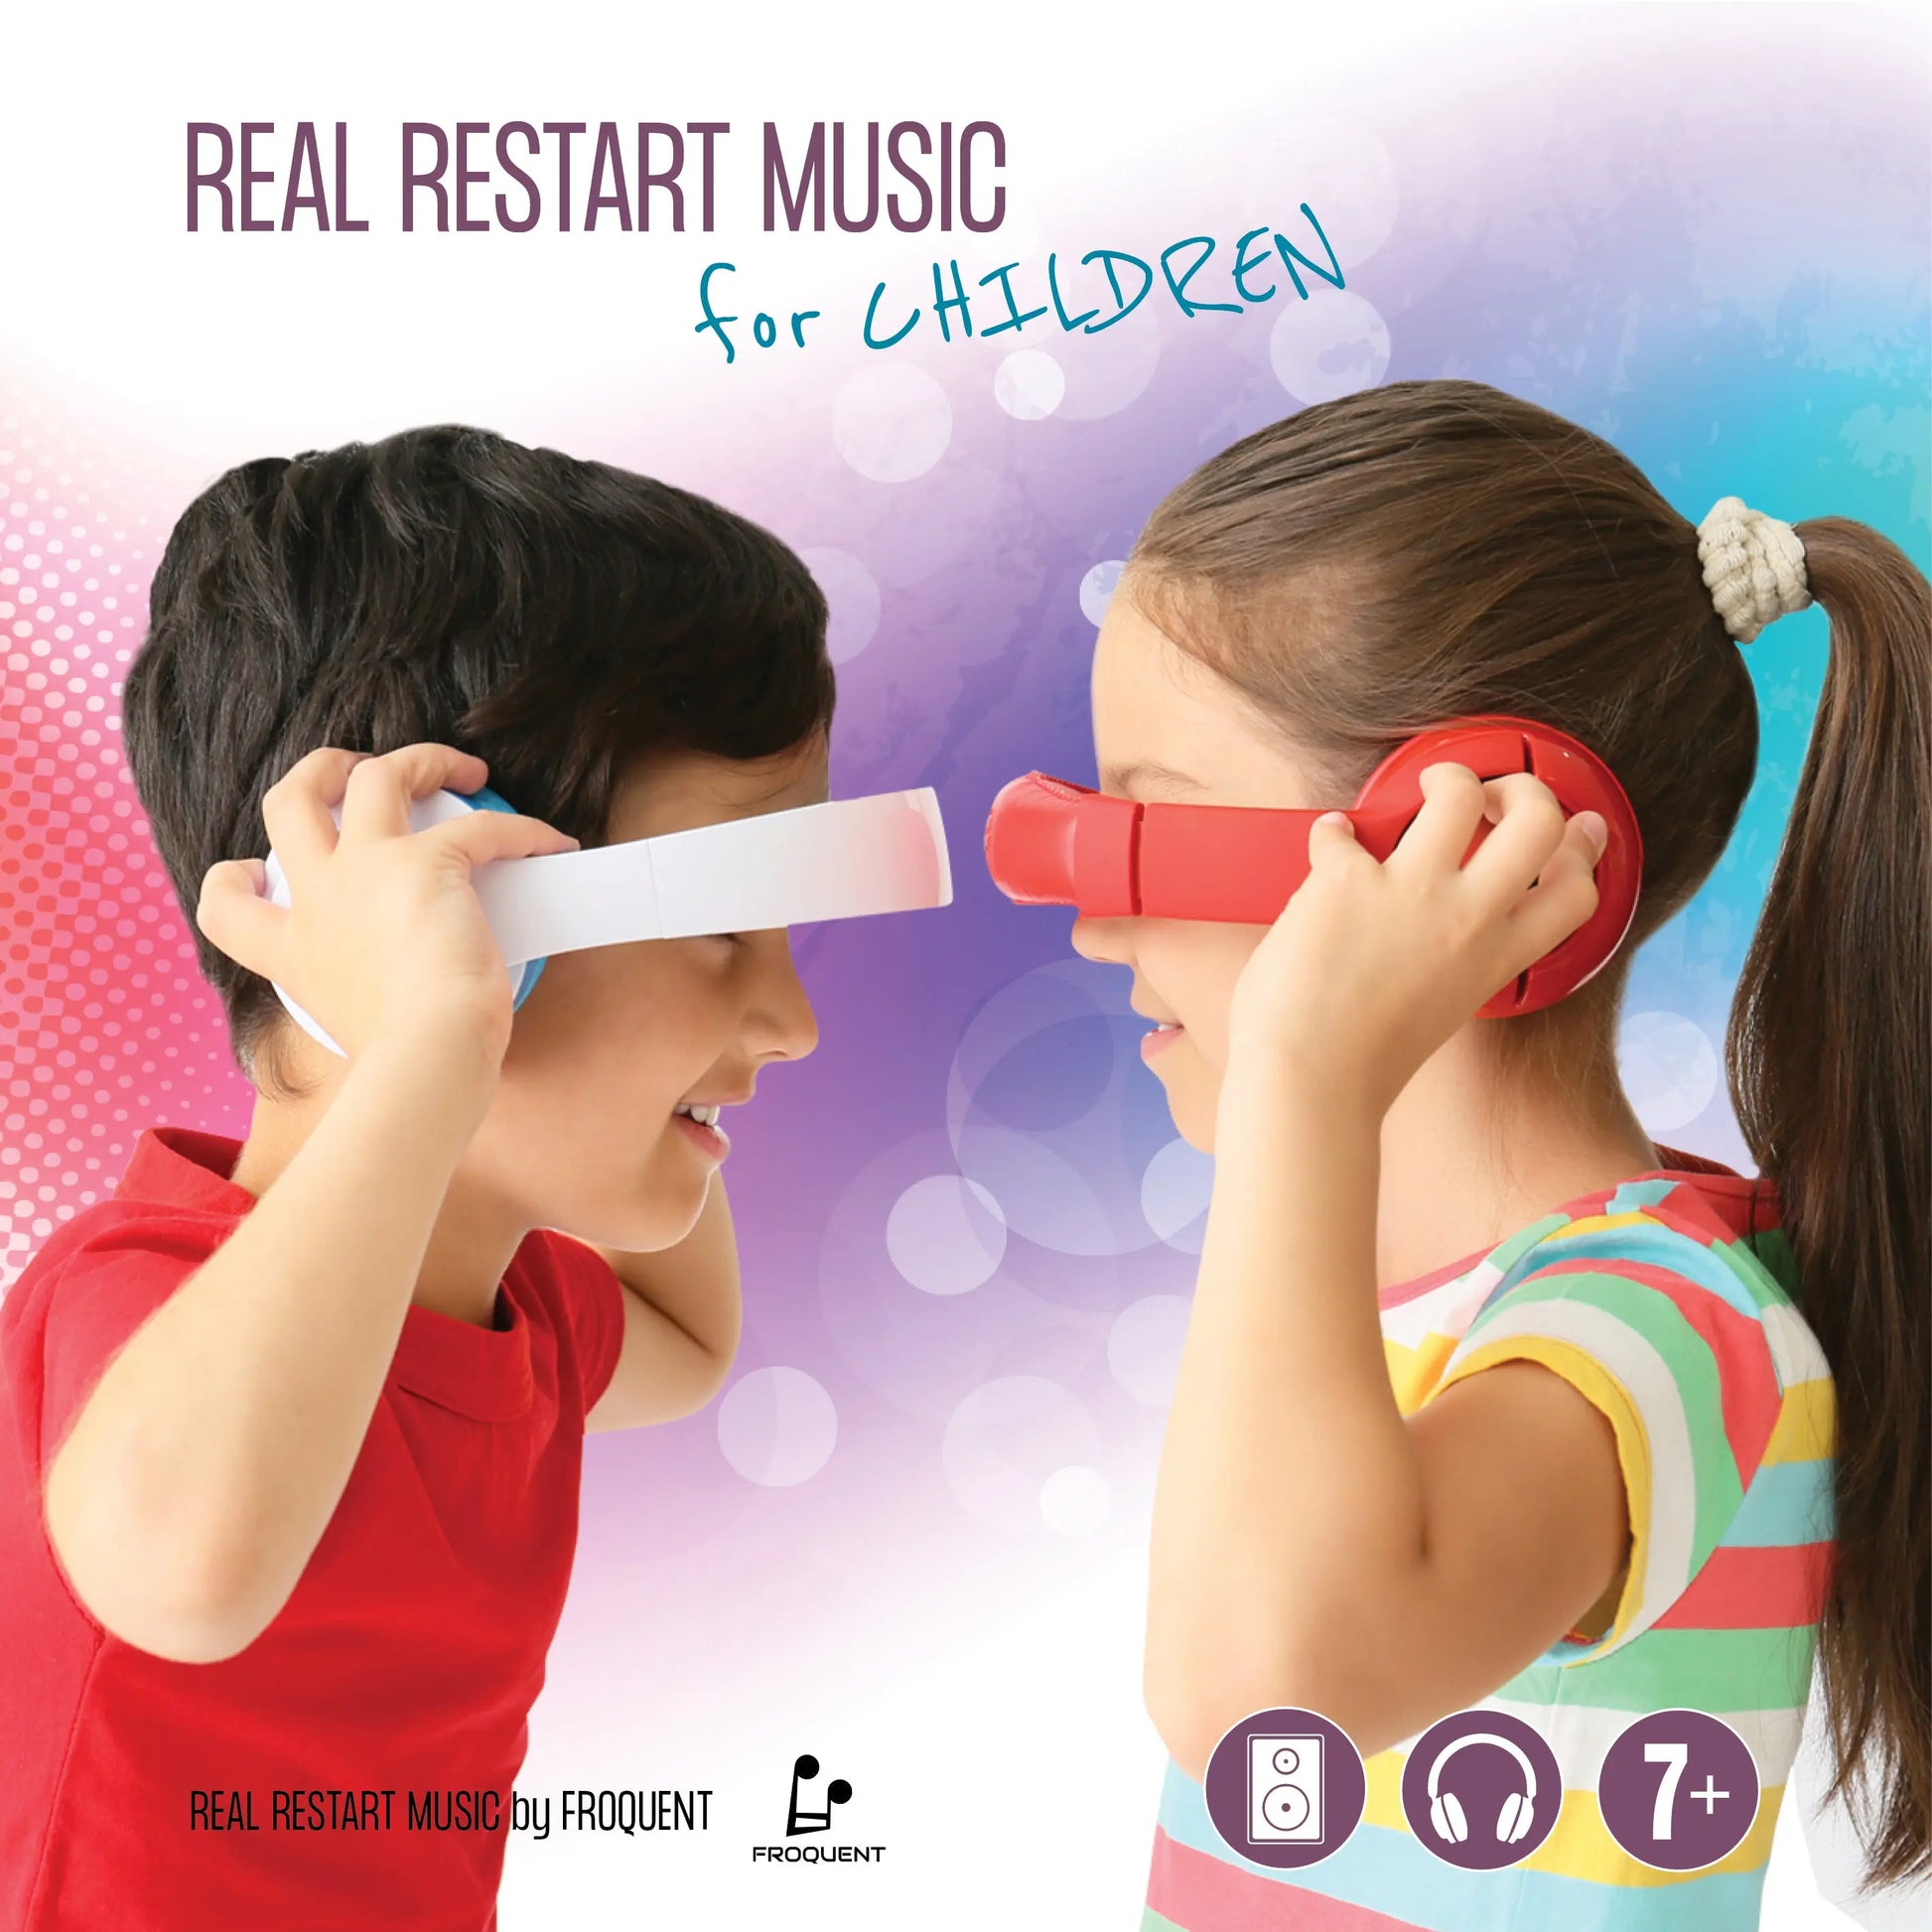 REAL RESTART MUSIC FOR CHILDREN FROQUENT